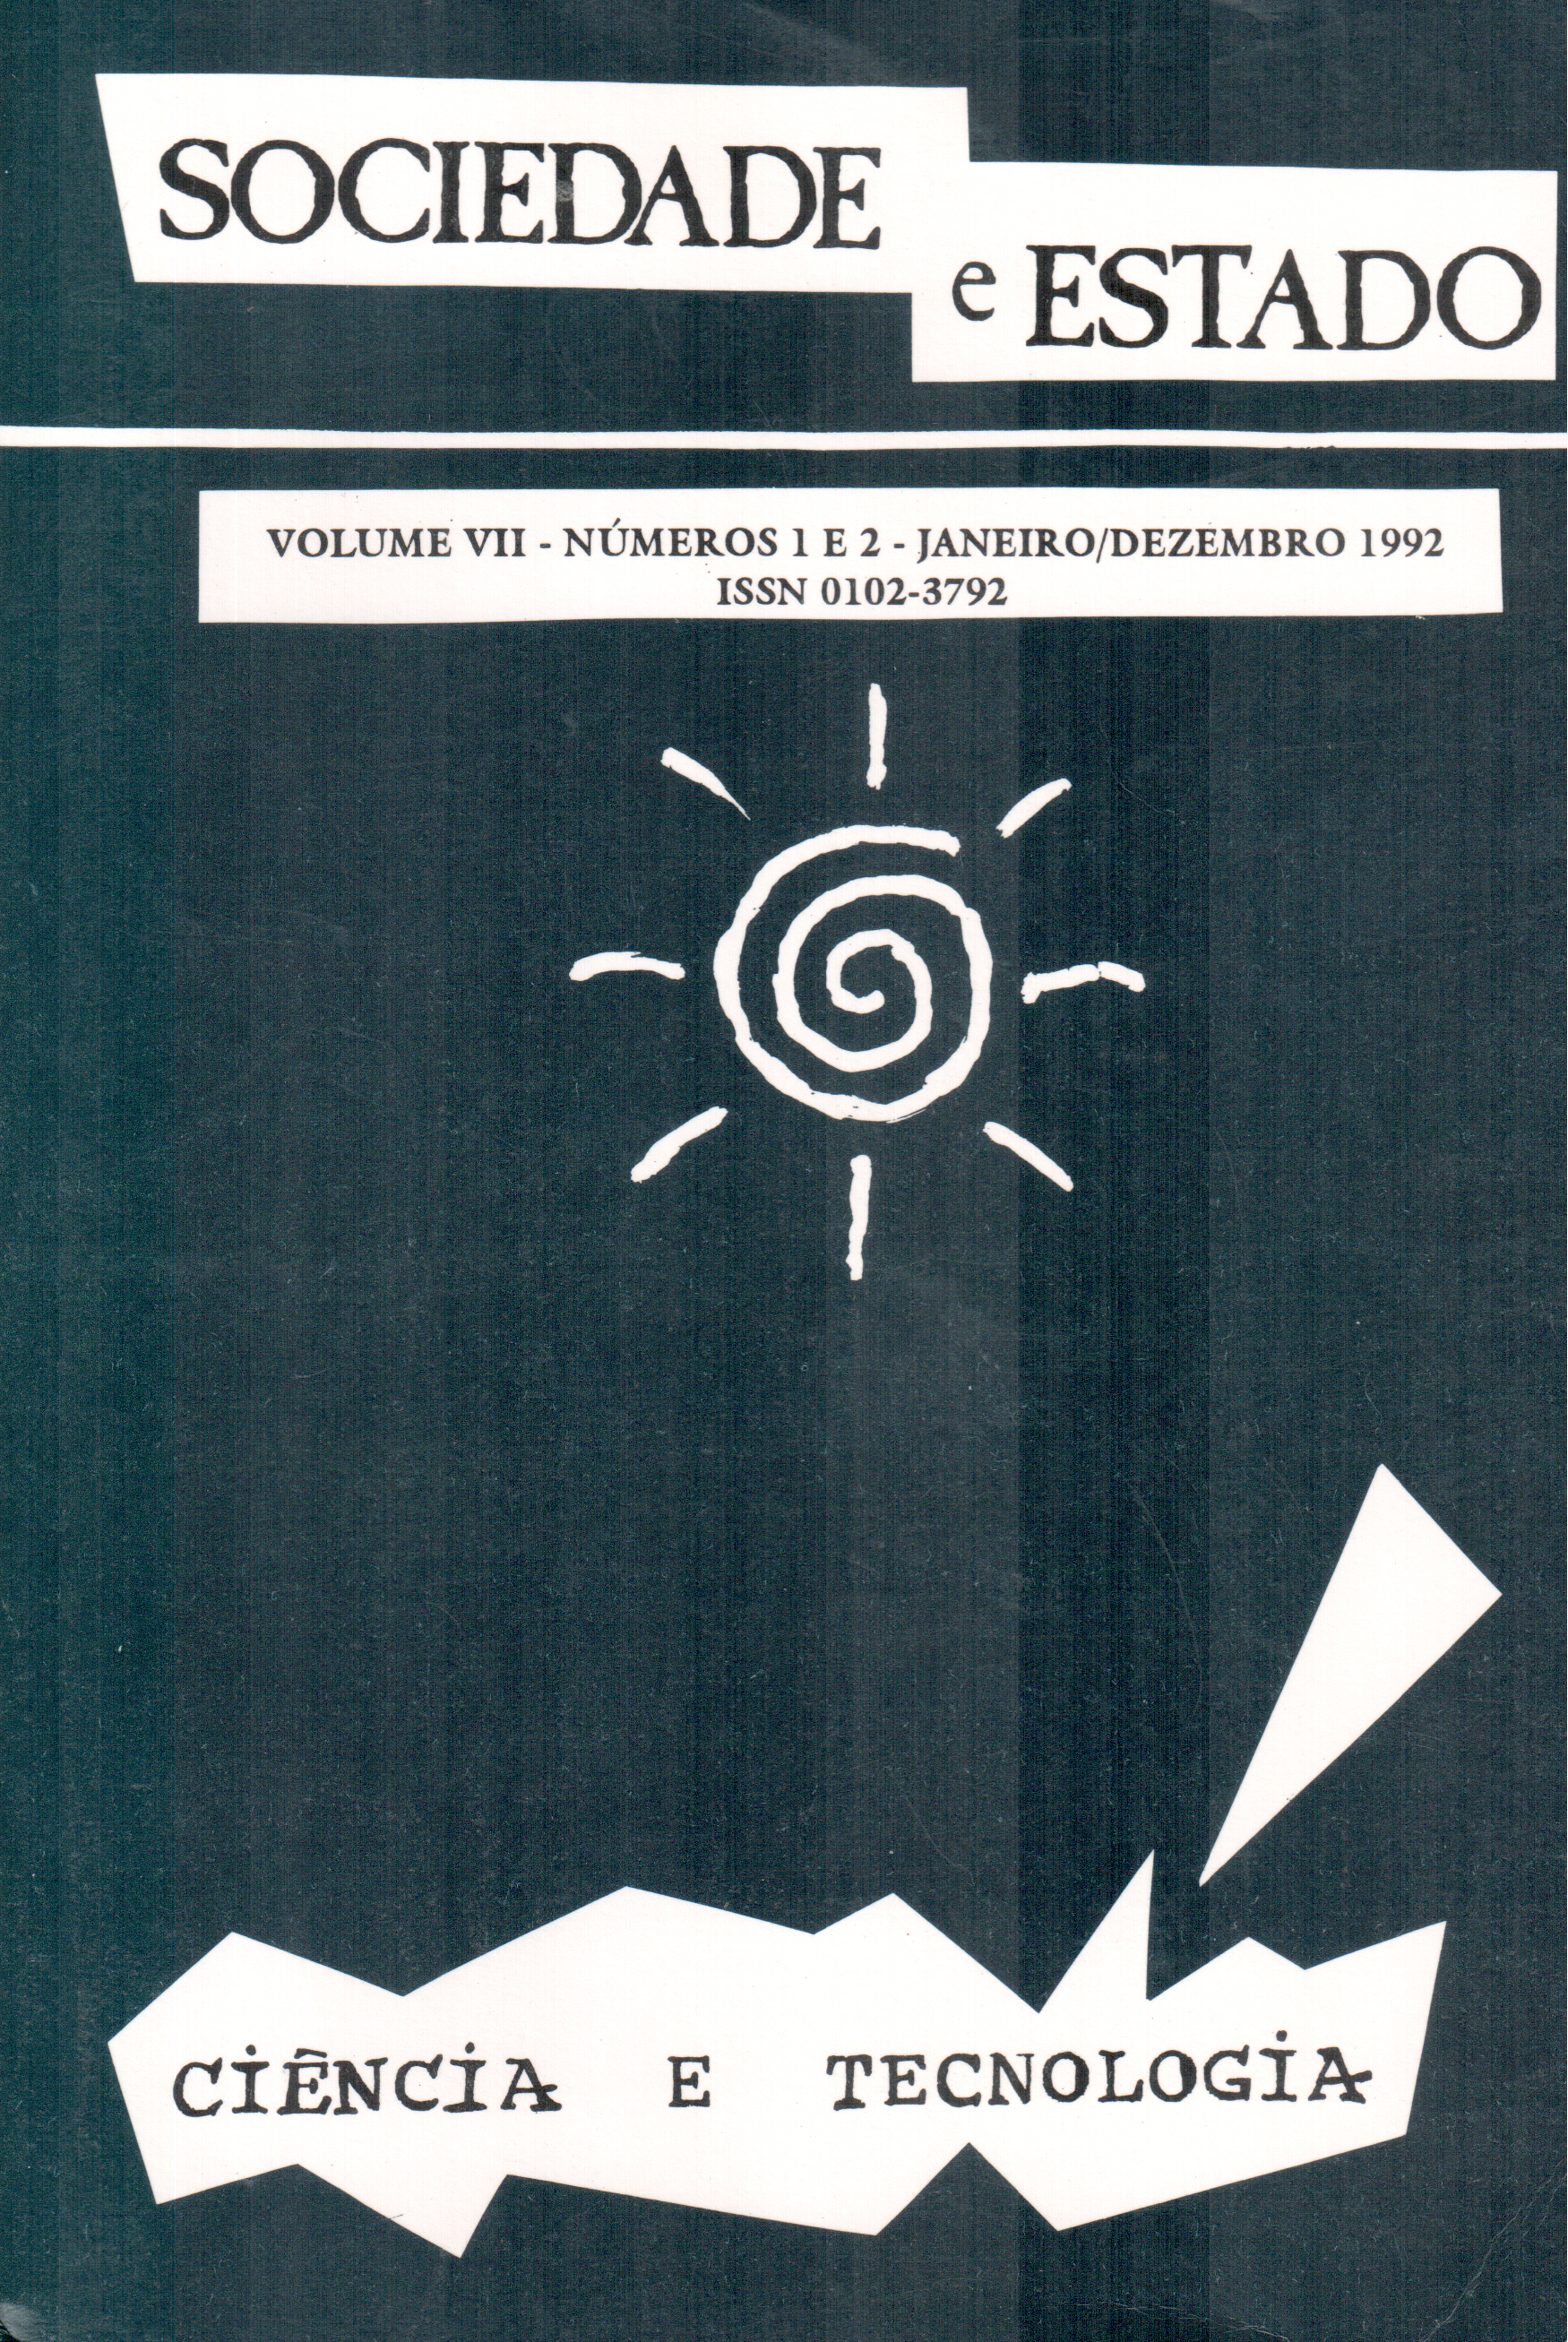 					Visualizar v. 7 n. 01 e 02 (1992): CIÊNCIA & TECNOLOGIA
				